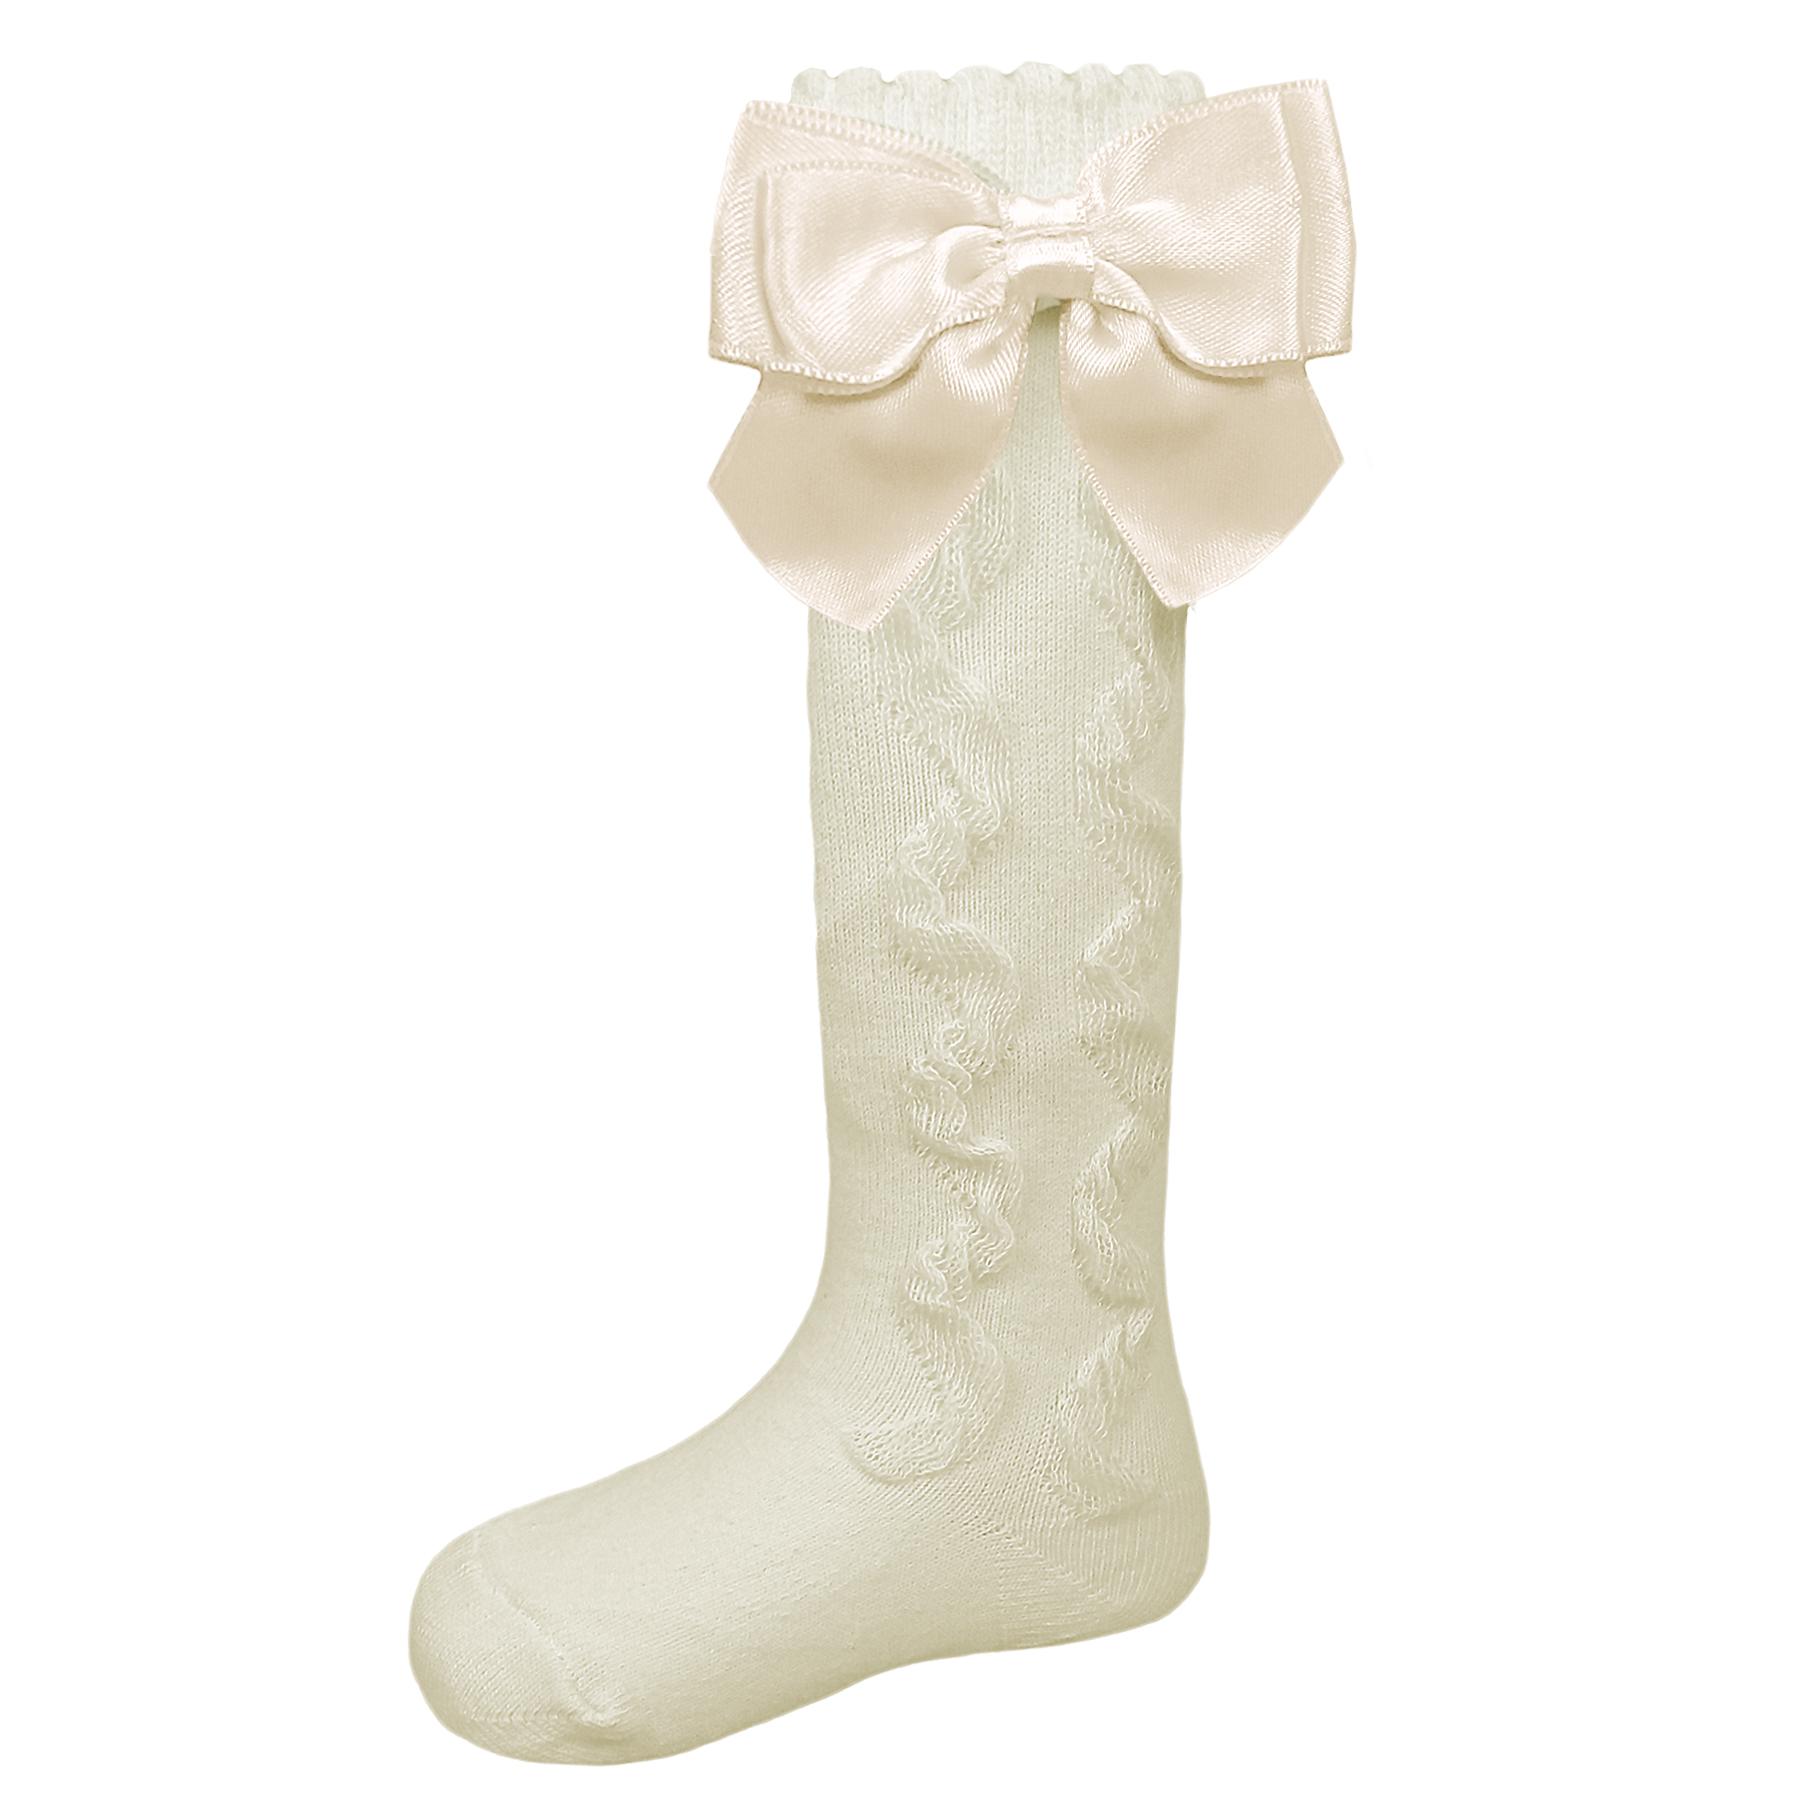 Pex Kids Grazia Knee High Side Bow Ruffle Socks in Cream